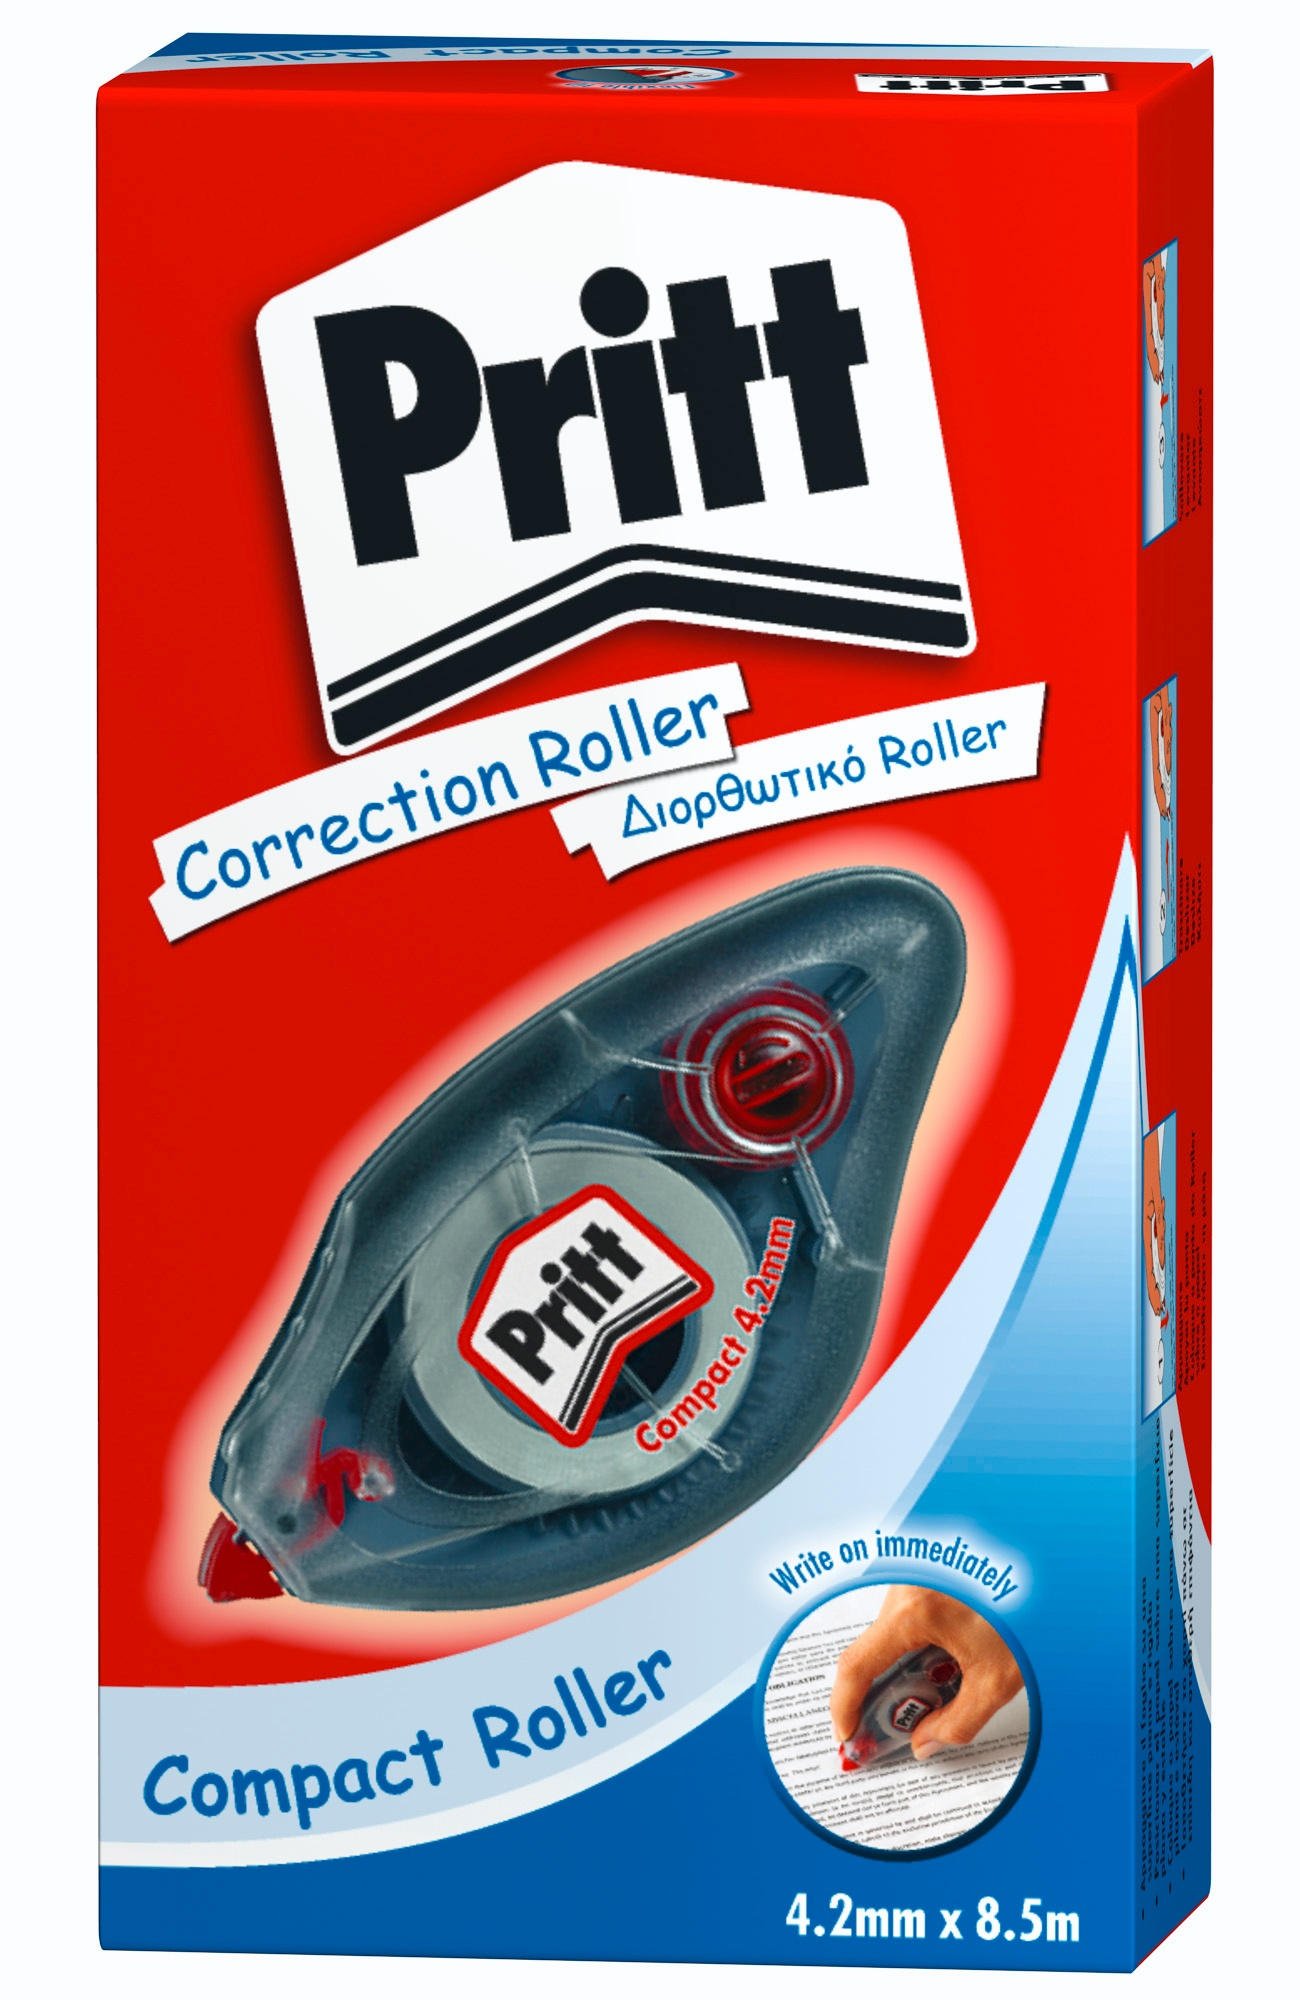 Correttore Pritt roller compact mm 4,2 x mt 10